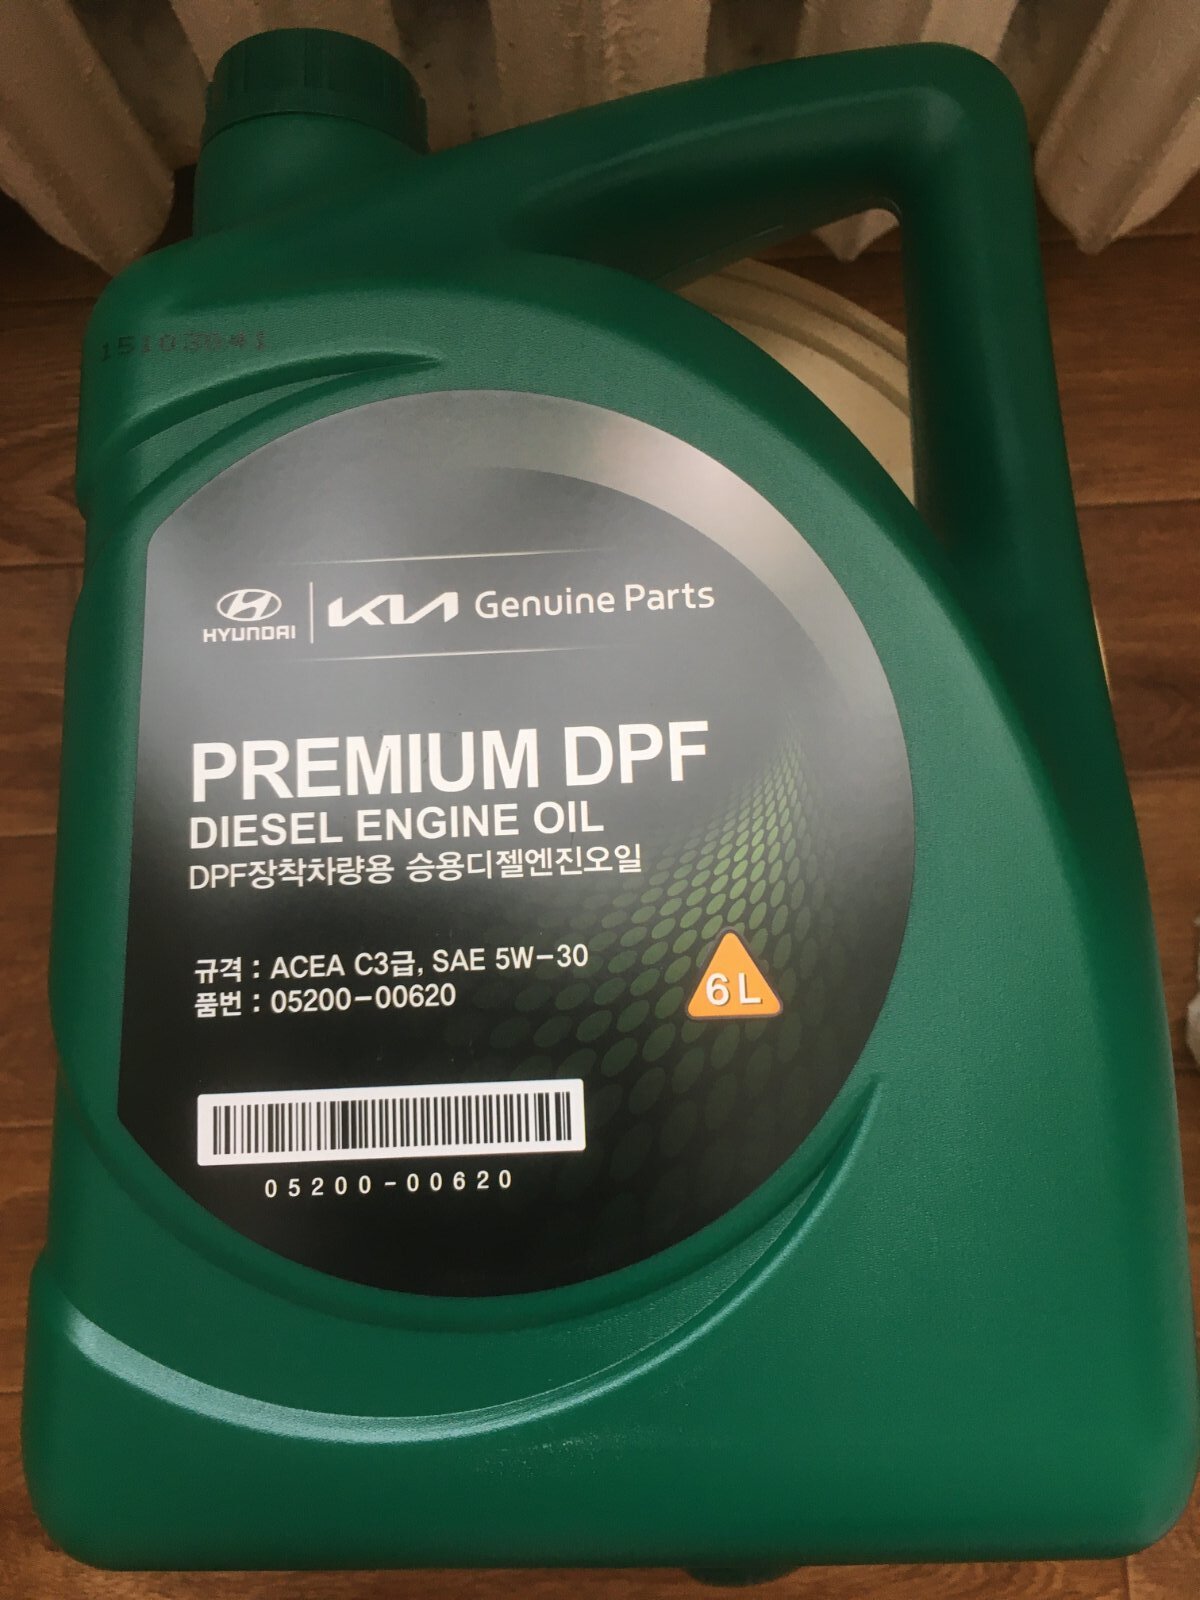 Моторное масло premium dpf diesel